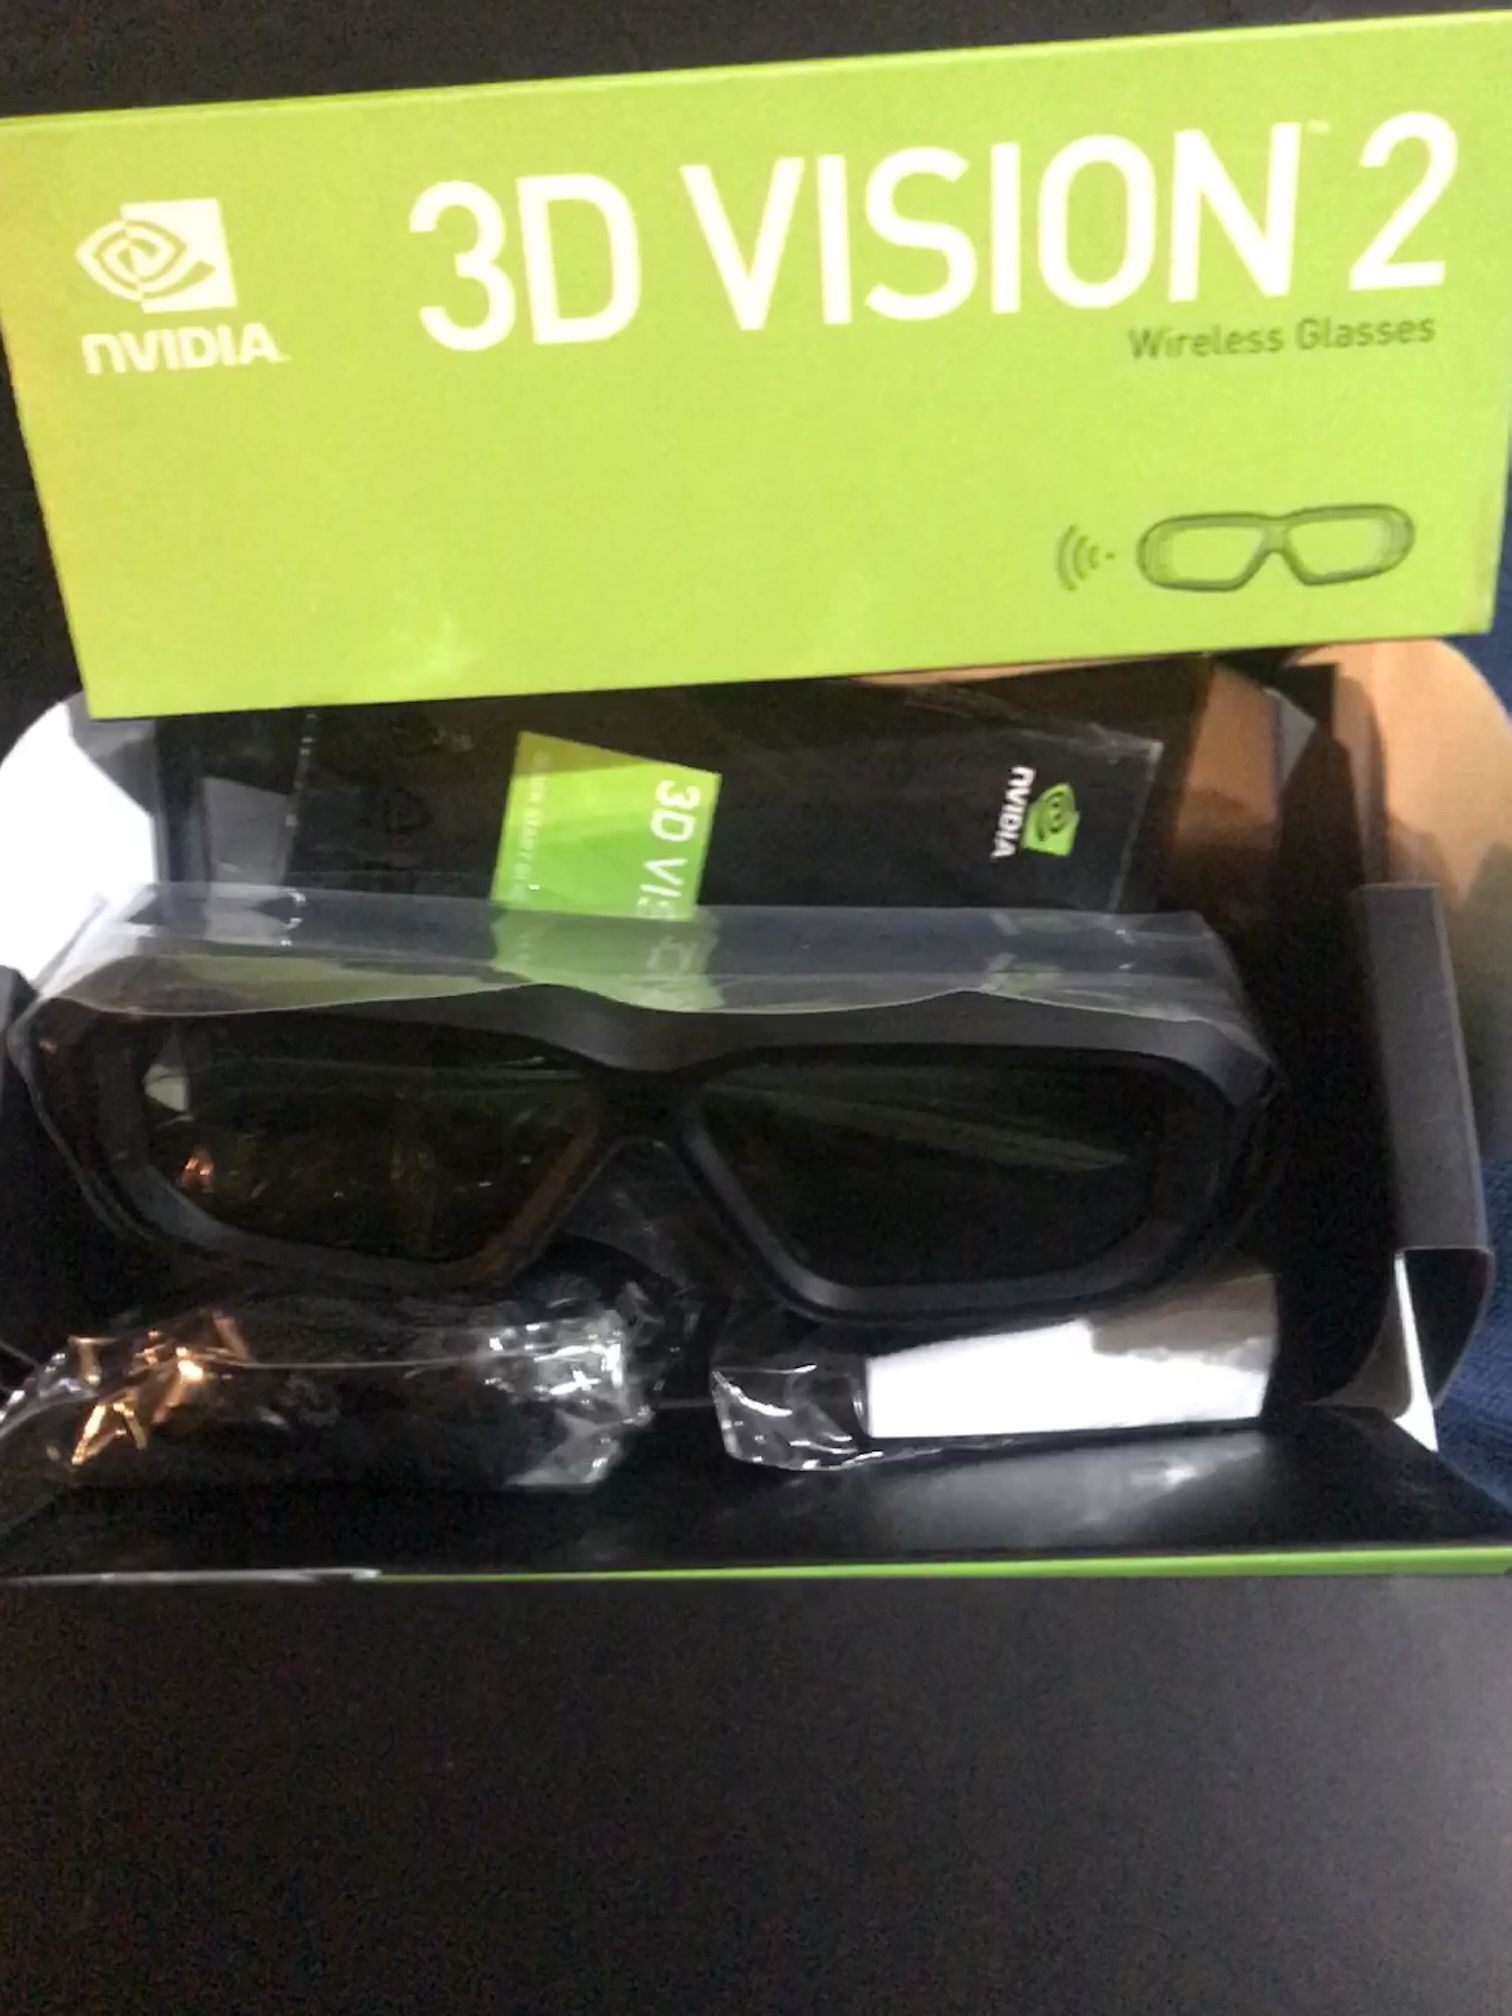 Nvidia 3D Vision 2 